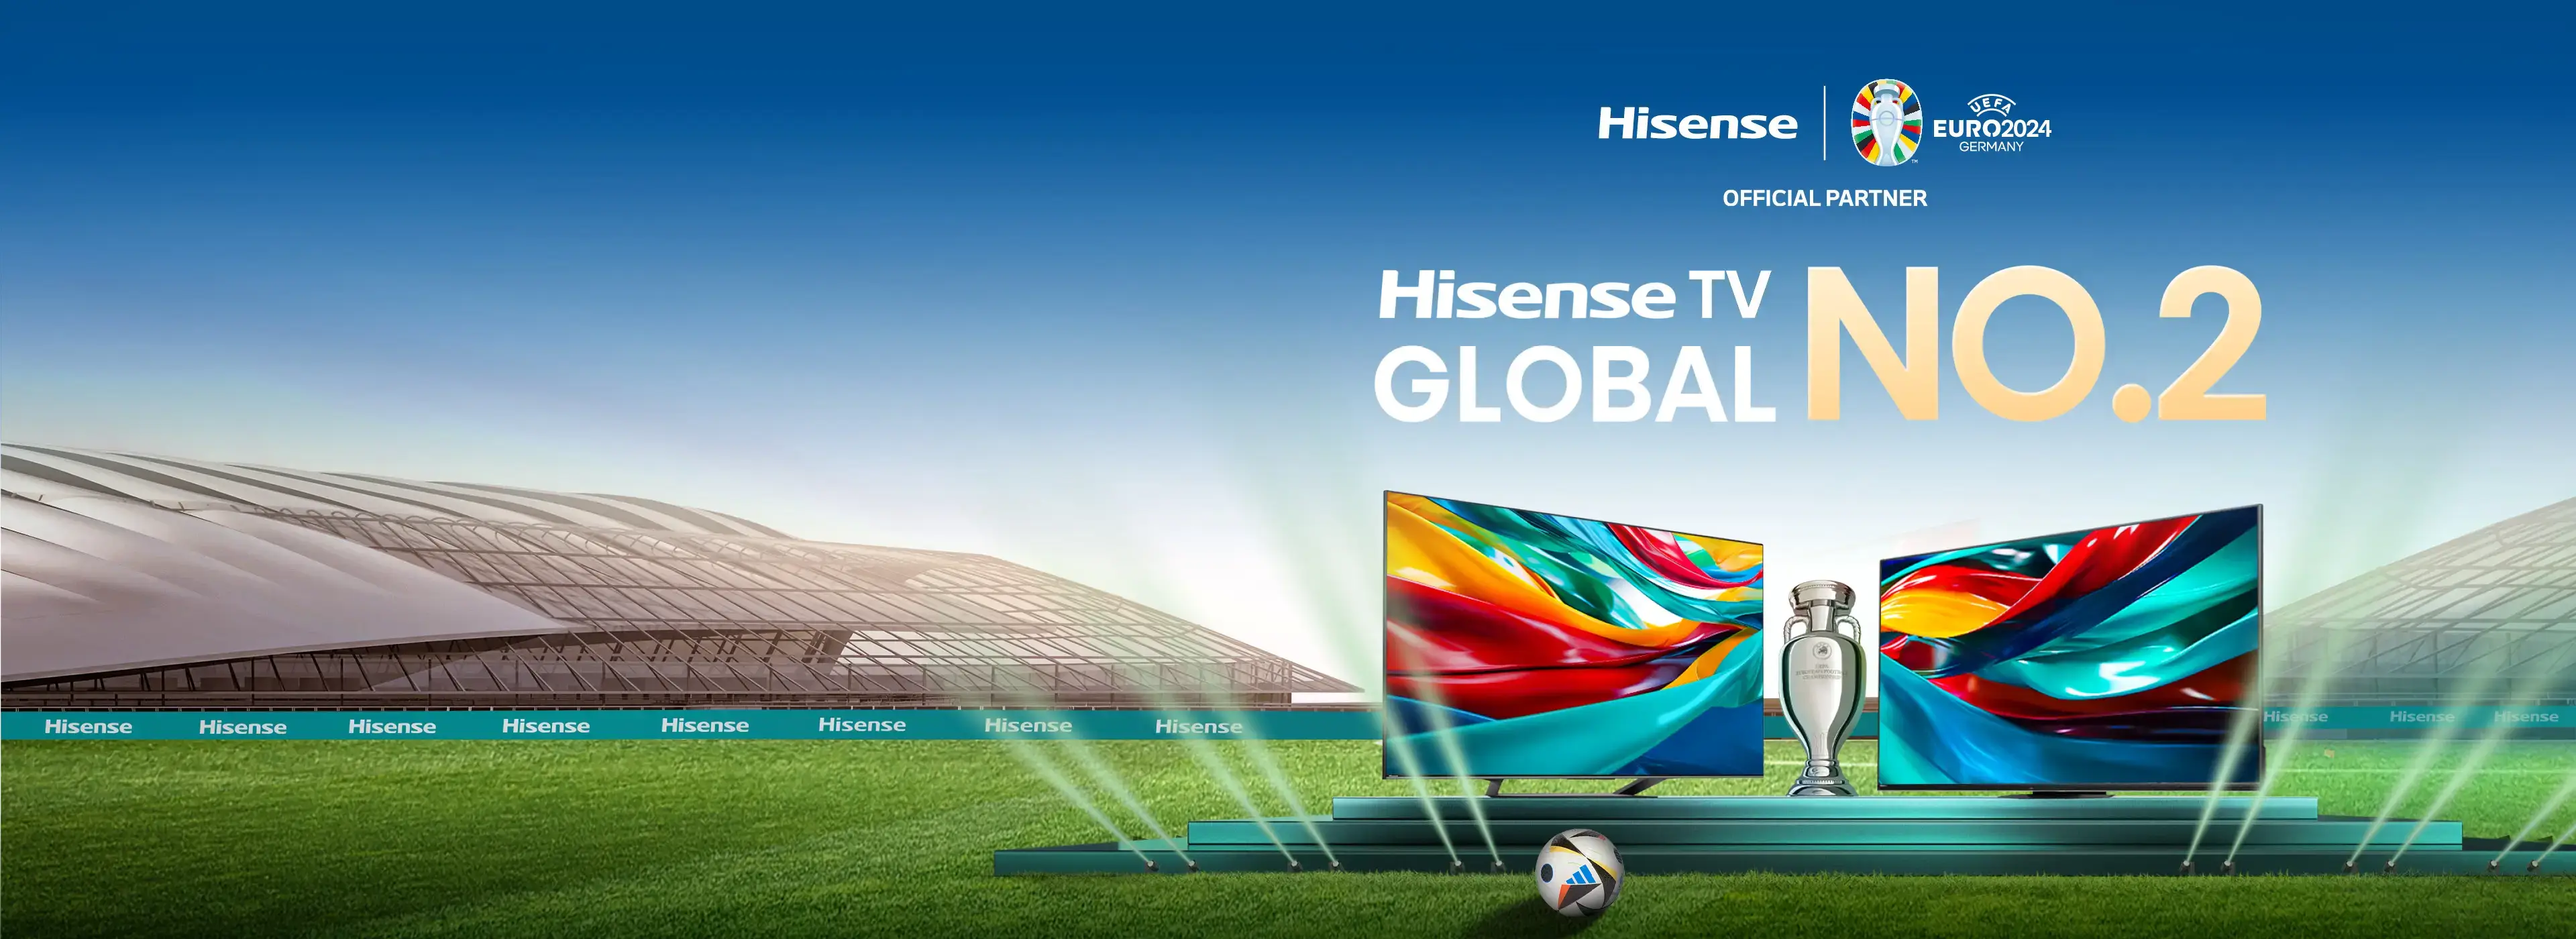 Hisense EURO2024 No2 TV HP 3840x1400 v2-2.webp